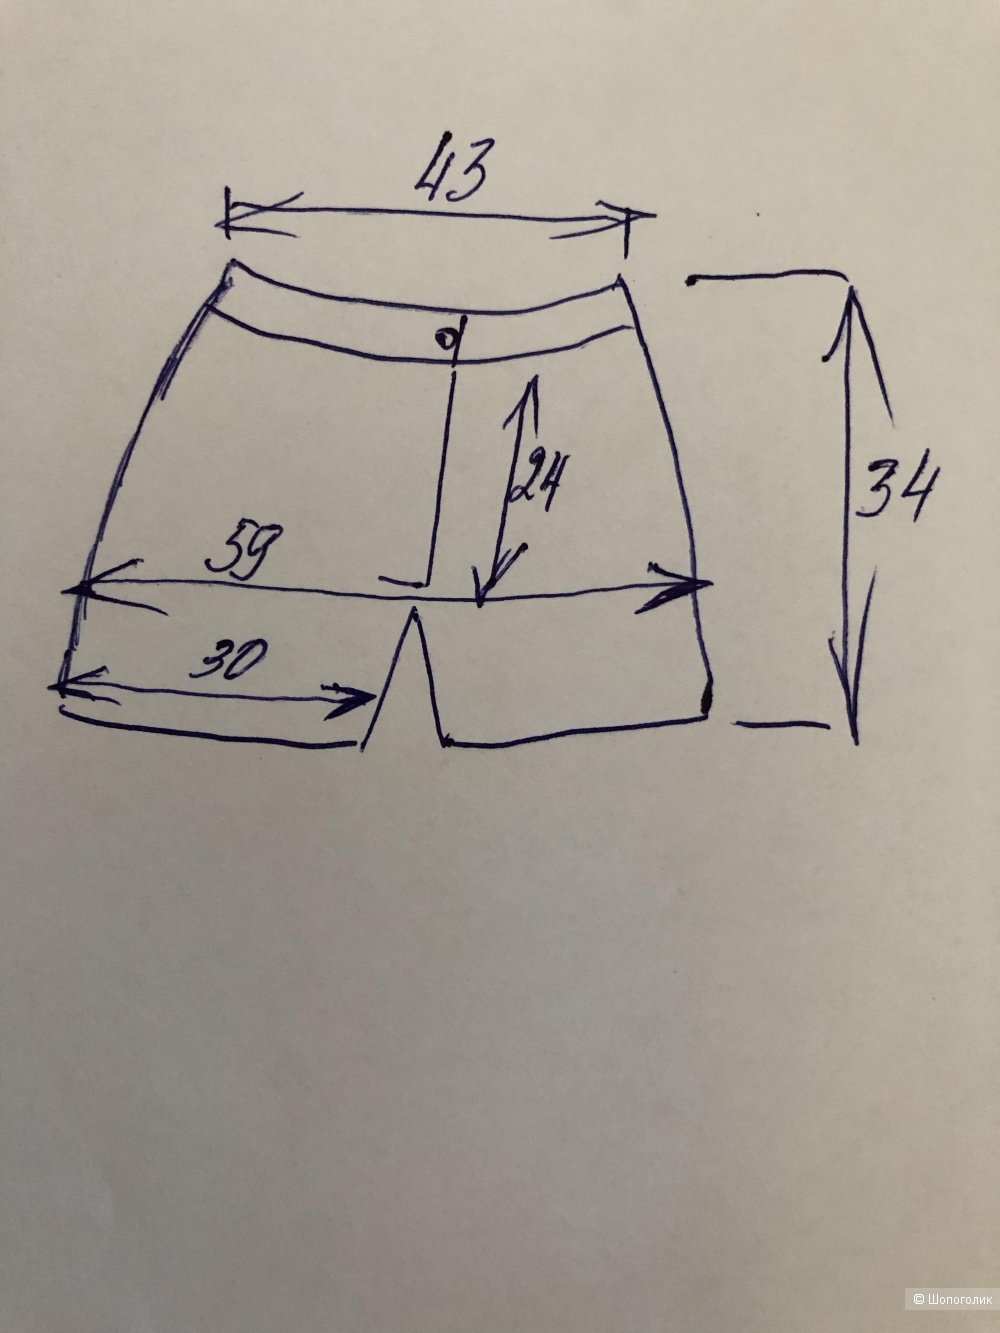 Кожаные шорты 3SUiSSES COLLECTION,40FR(46russ)